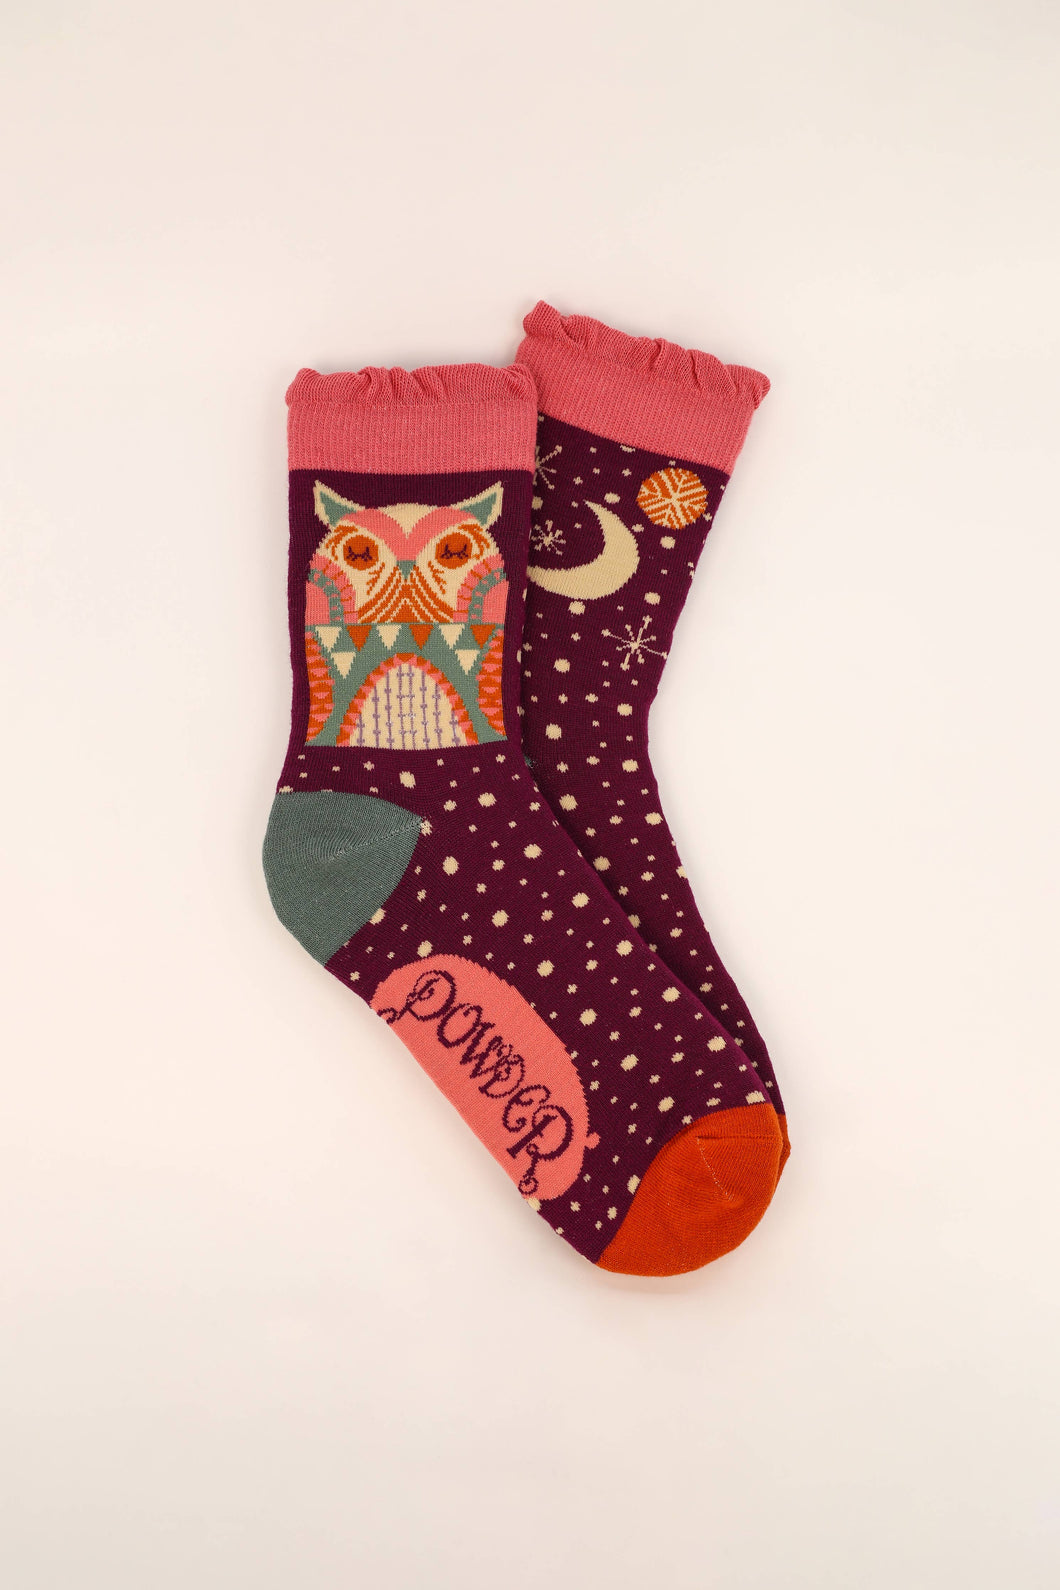 Owl by Moonlight Ankle Socks - Grape